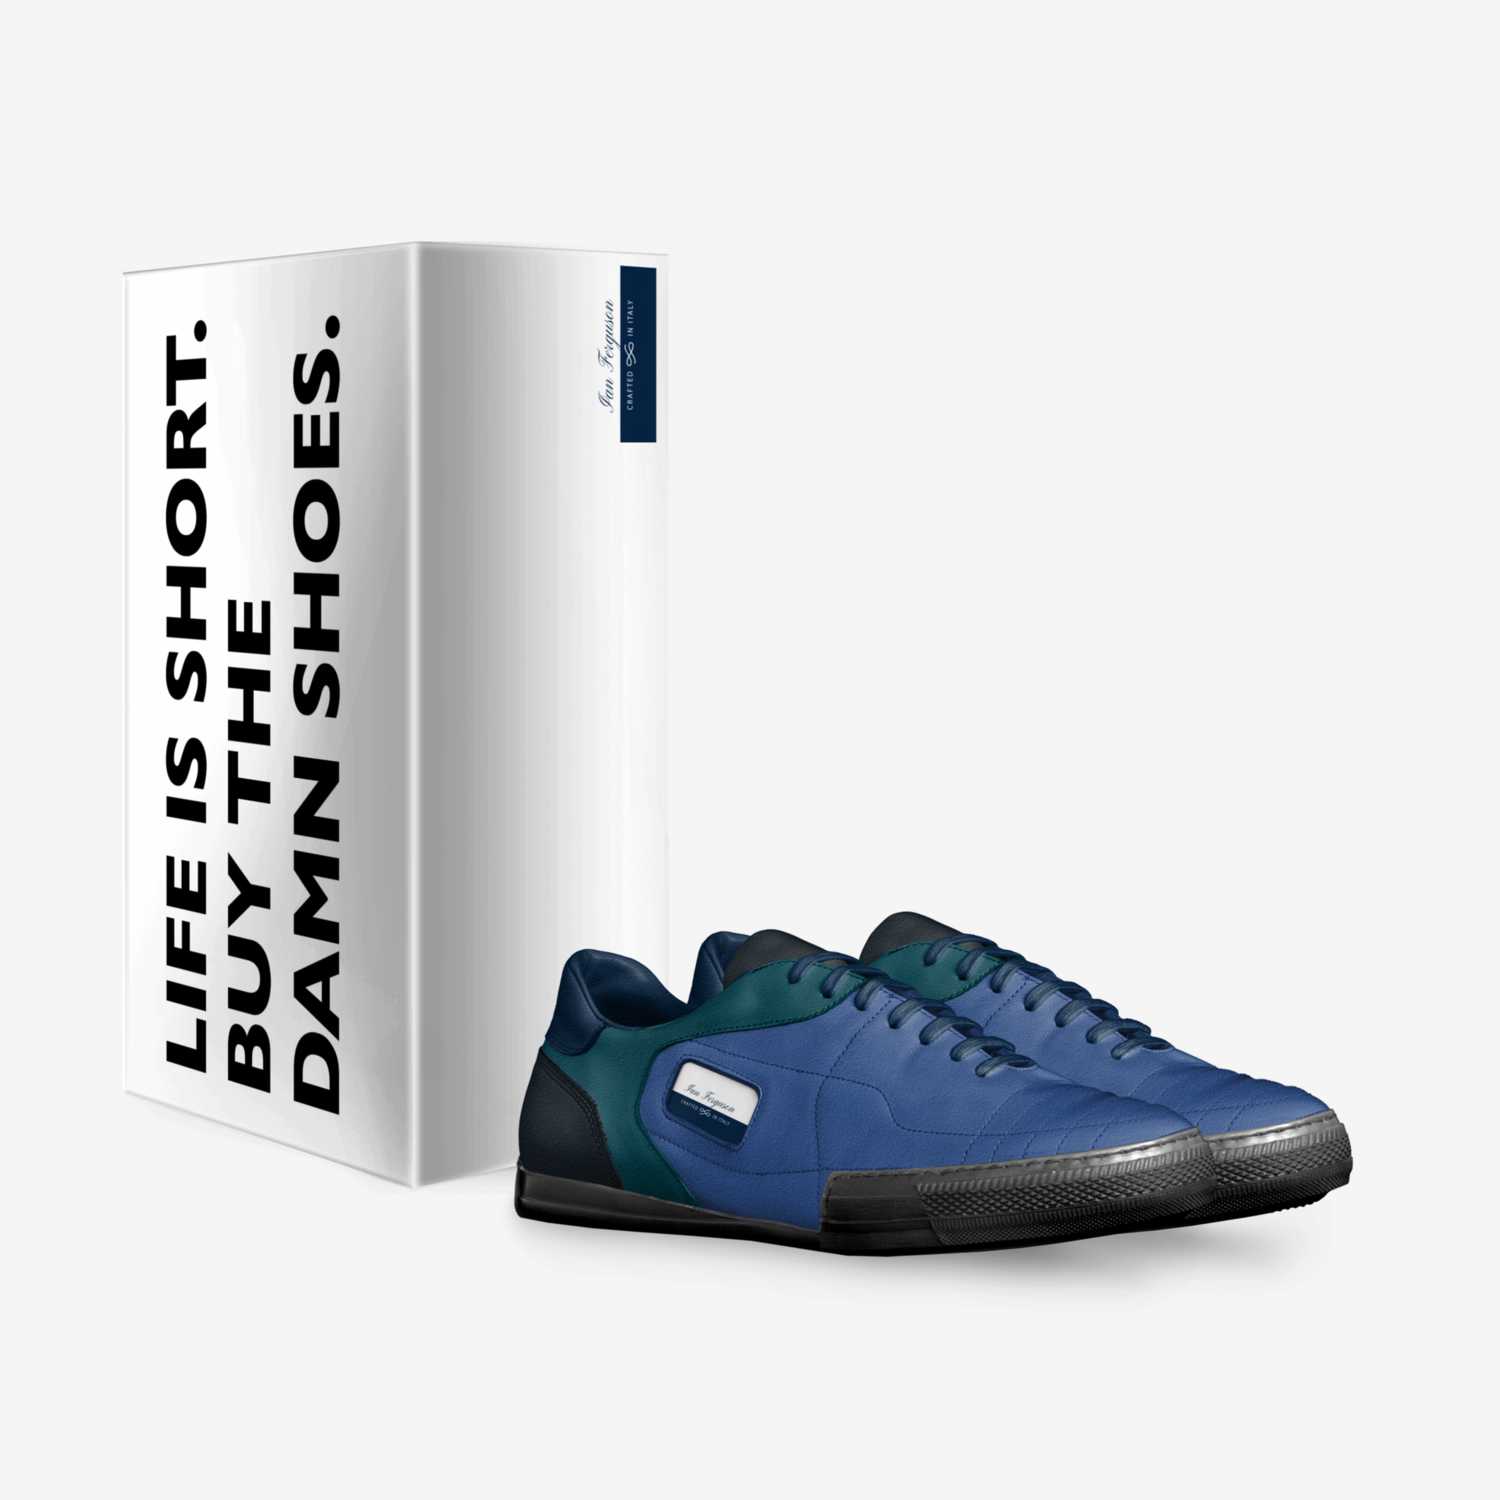 Ian Ferguson custom made in Italy shoes by Ian Ferguson | Box view